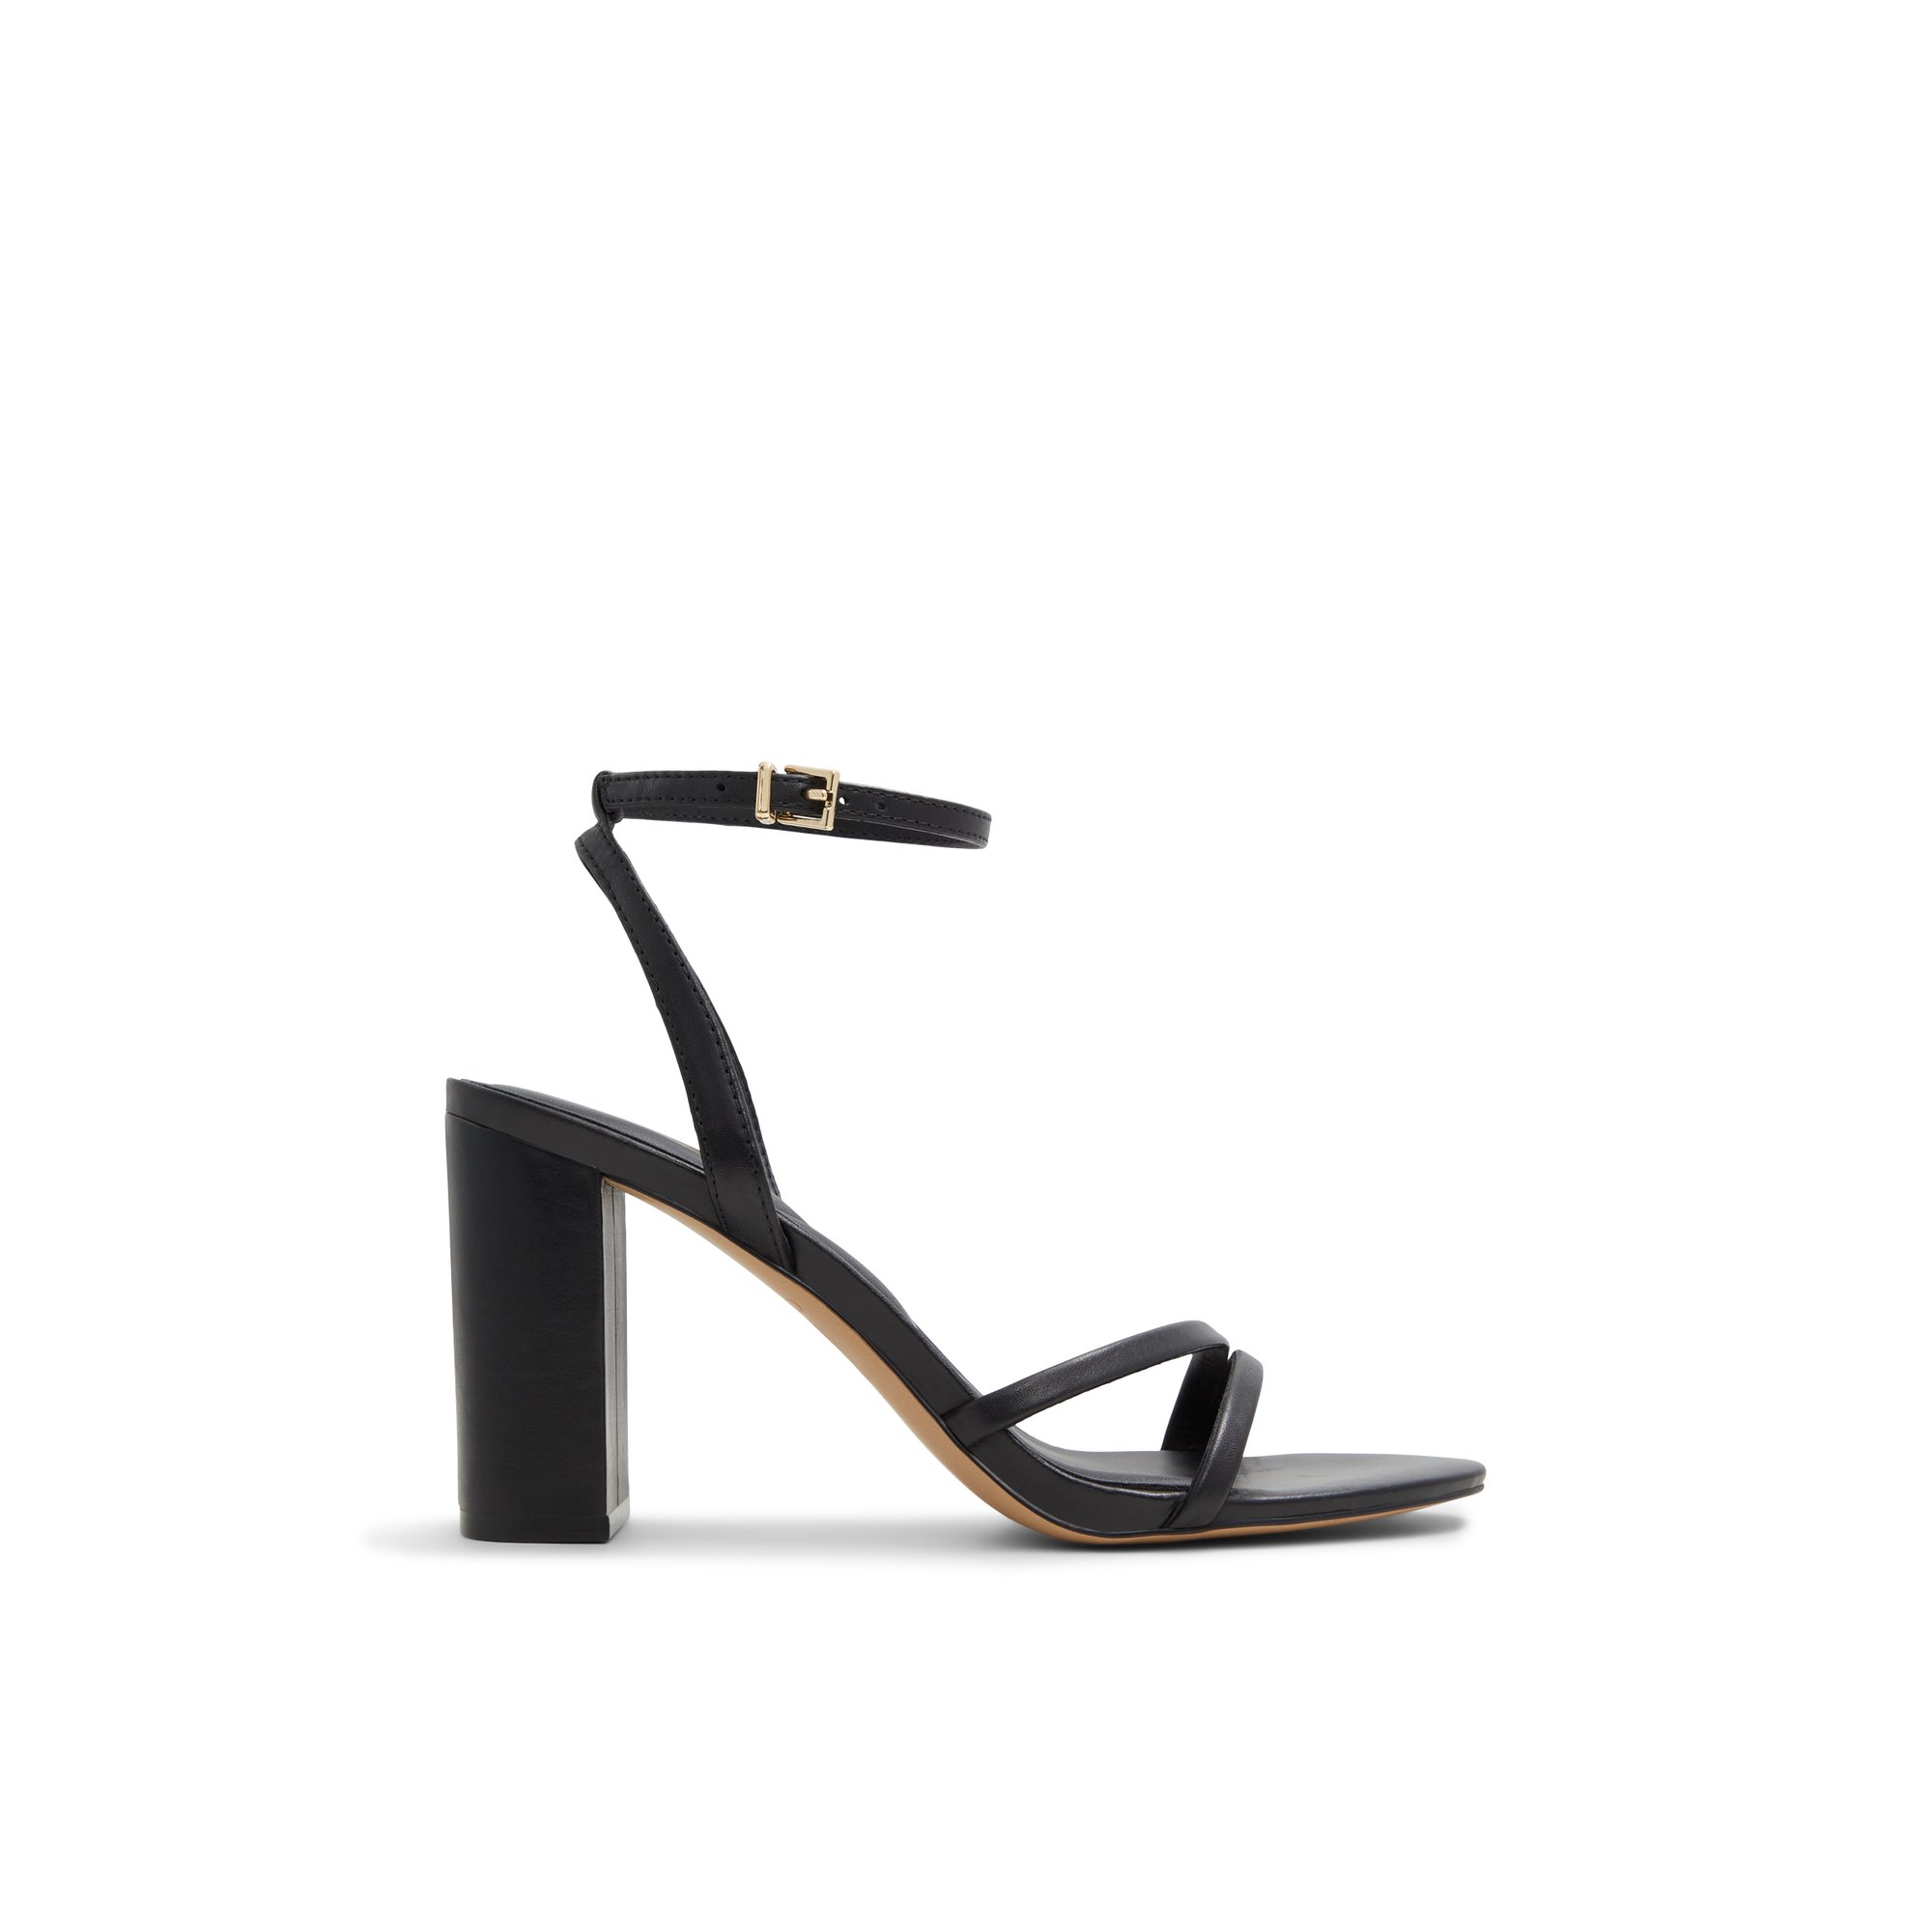 ALDO Rosalind - Women's Strappy Sandal Sandals - Black